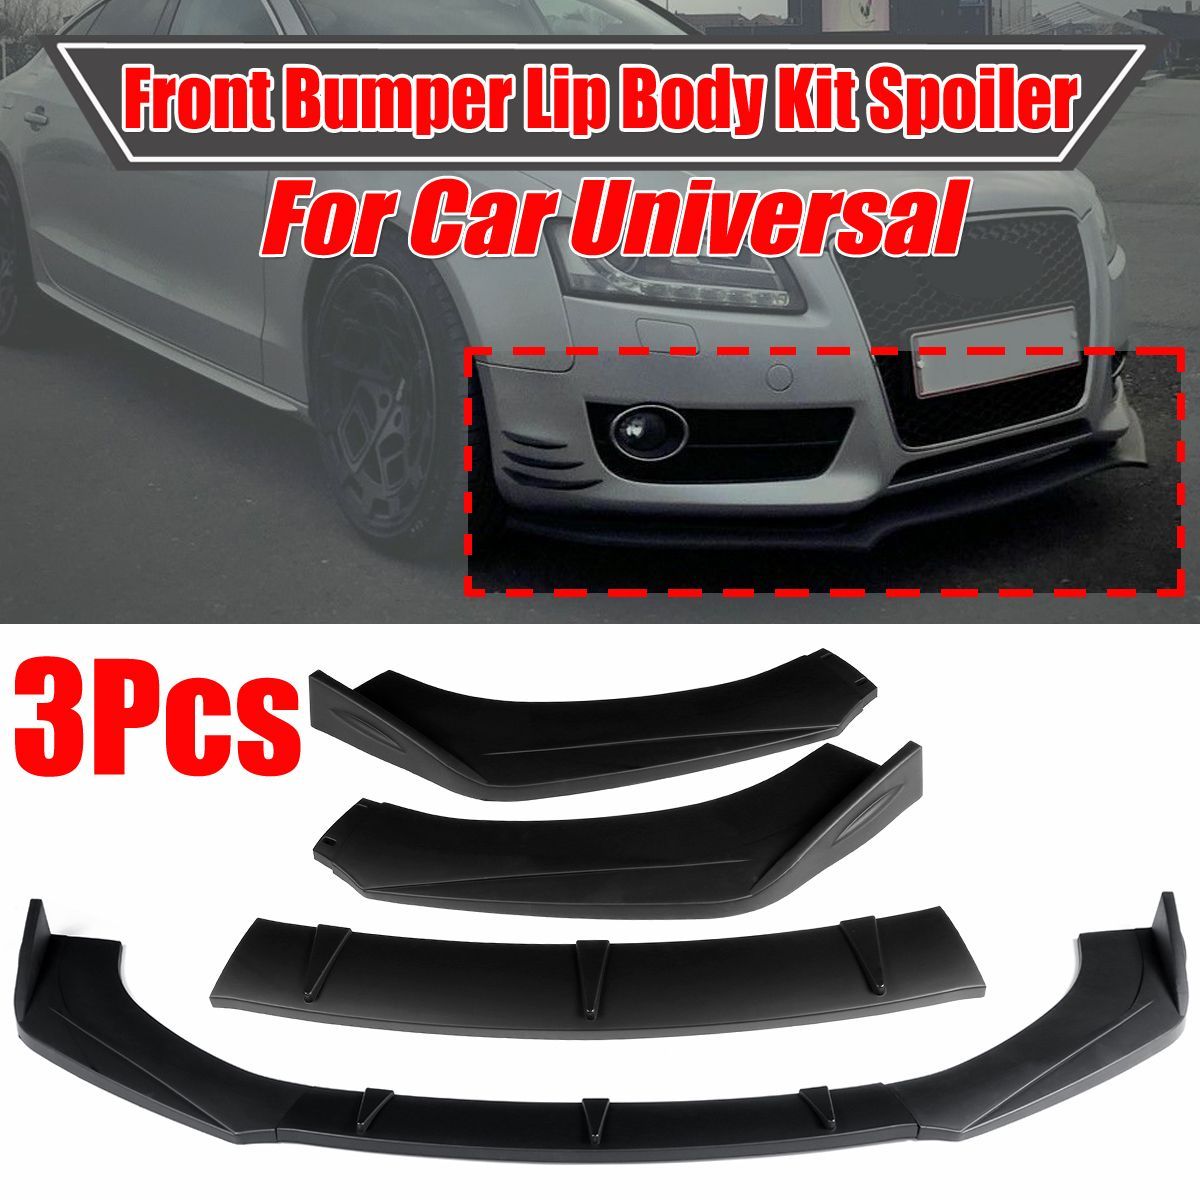 Universal-Front-Bumper-Protector-Lip-Body-Kit-Spoiler-For-Honda-Civic-BMW-Benz-Audi-1690232